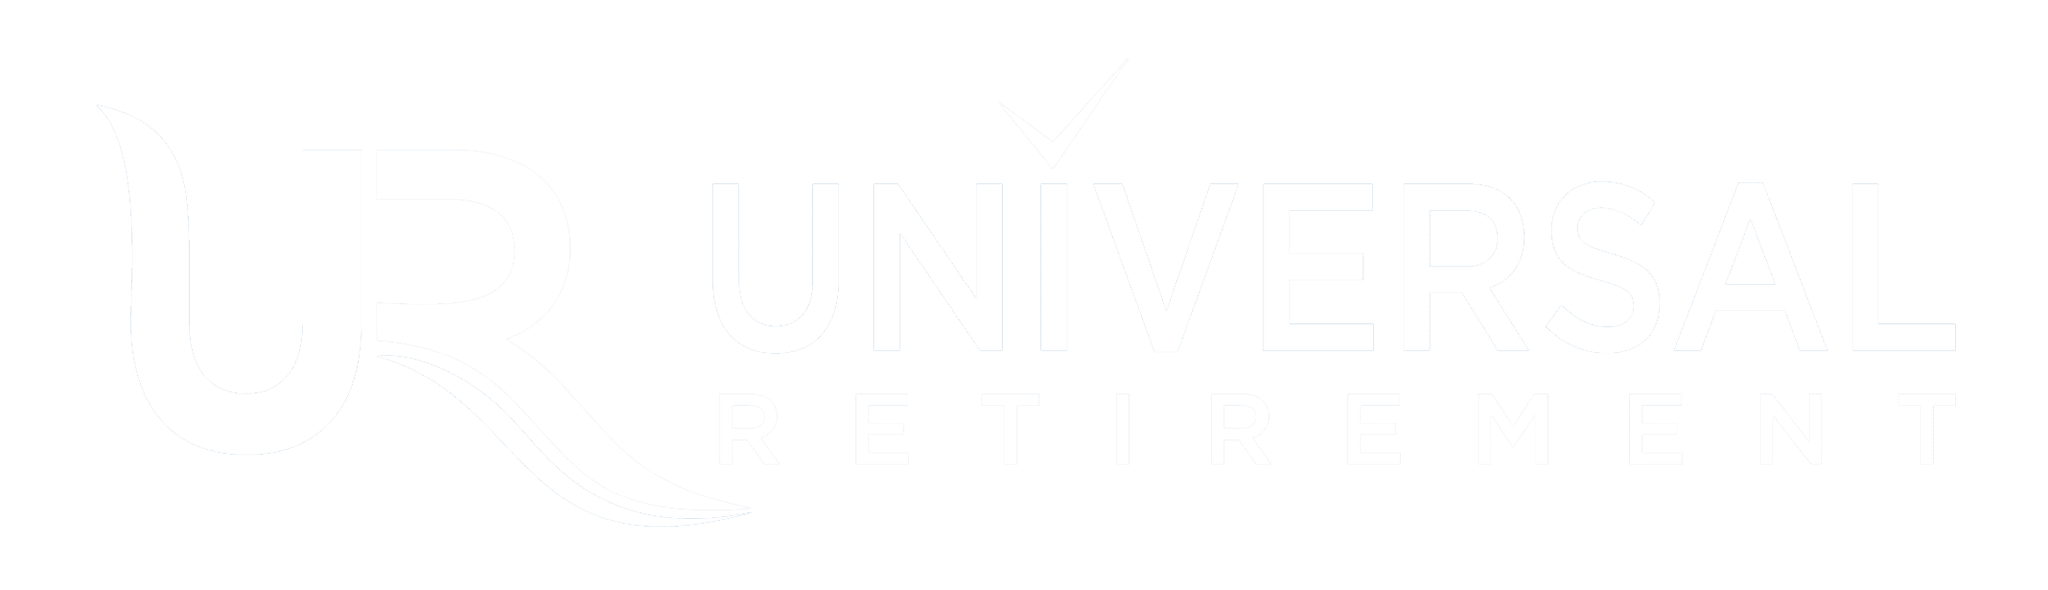 universal retirement